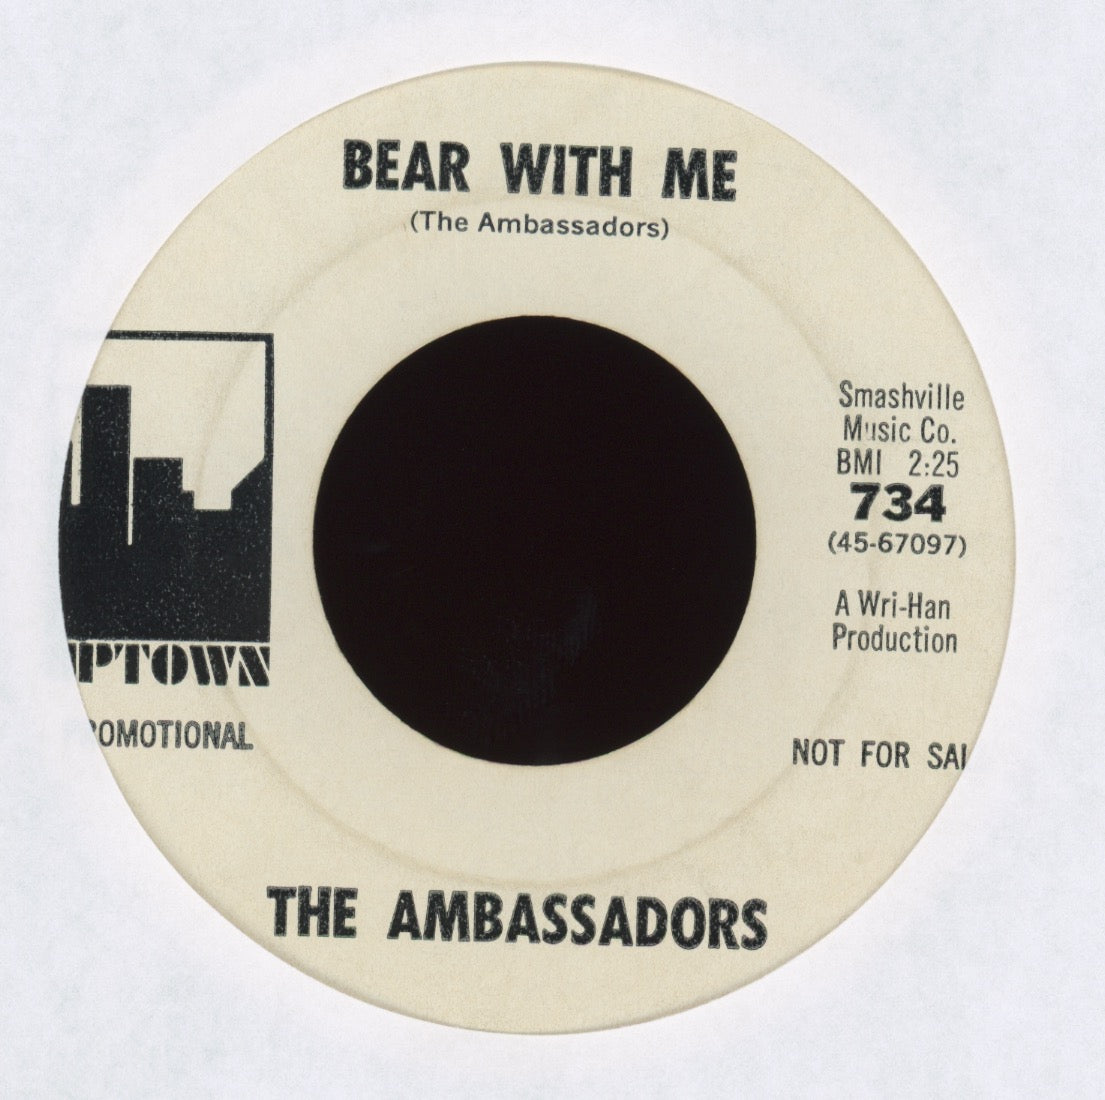 The Ambassadors - I Need Someone on Uptown Promo